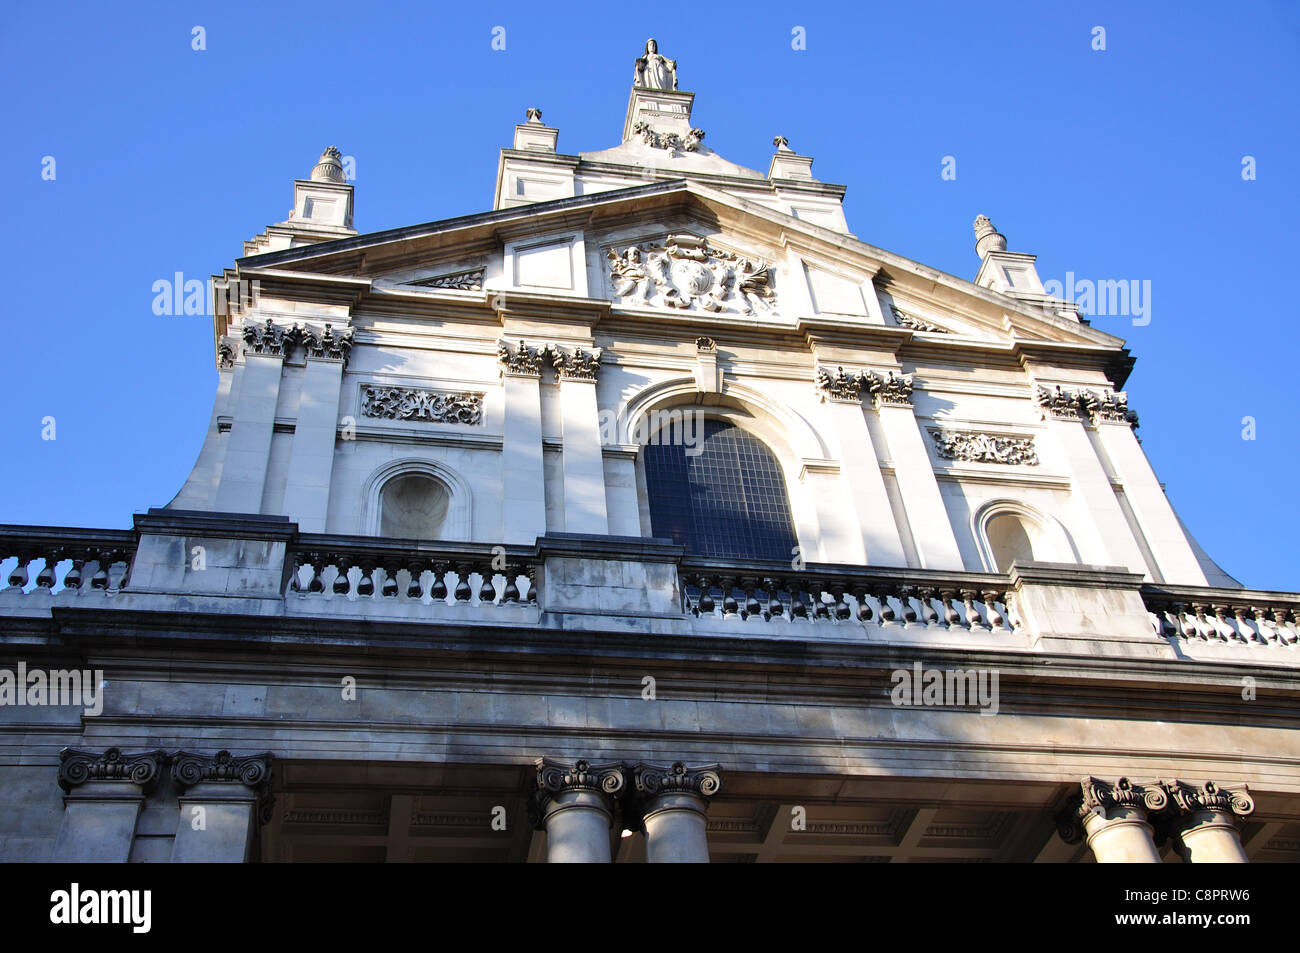 Brompton Oratory, Brompton Road, Brompton, Royal Borough de Kensington et Chelsea, Greater London, Angleterre, Royaume-Uni Banque D'Images